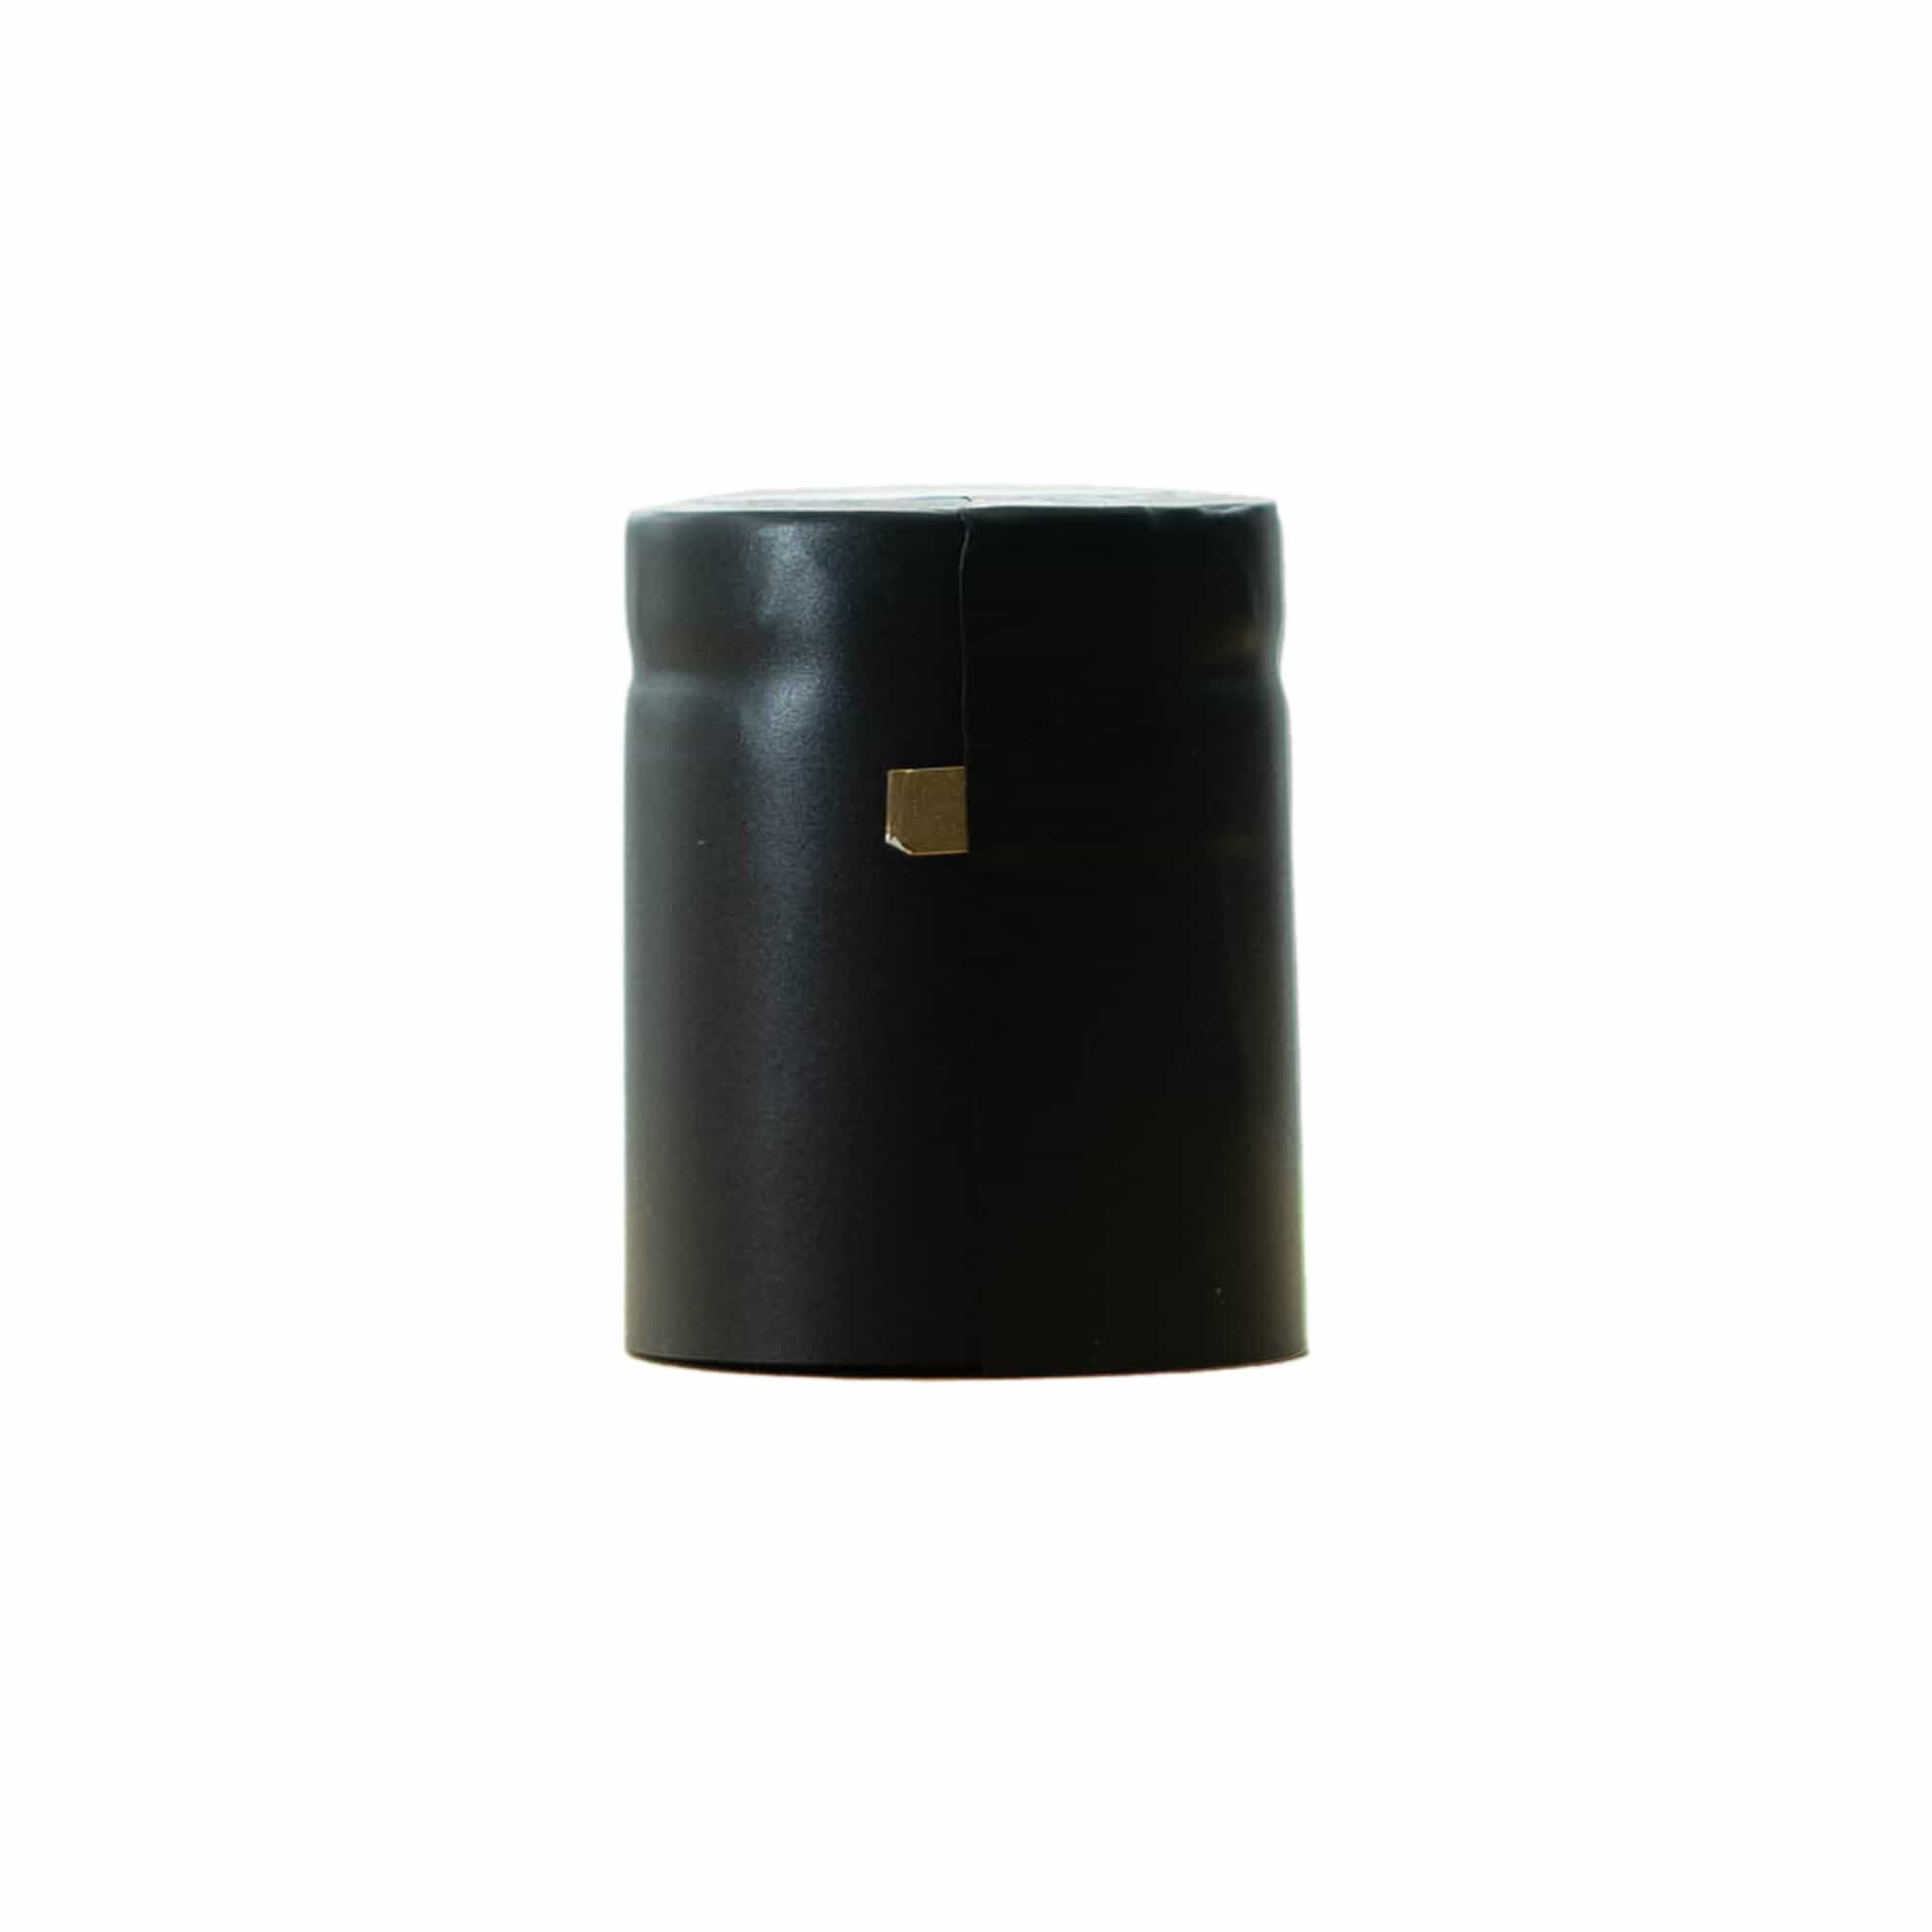 Heat shrink capsule 32x41, PVC plastic, black